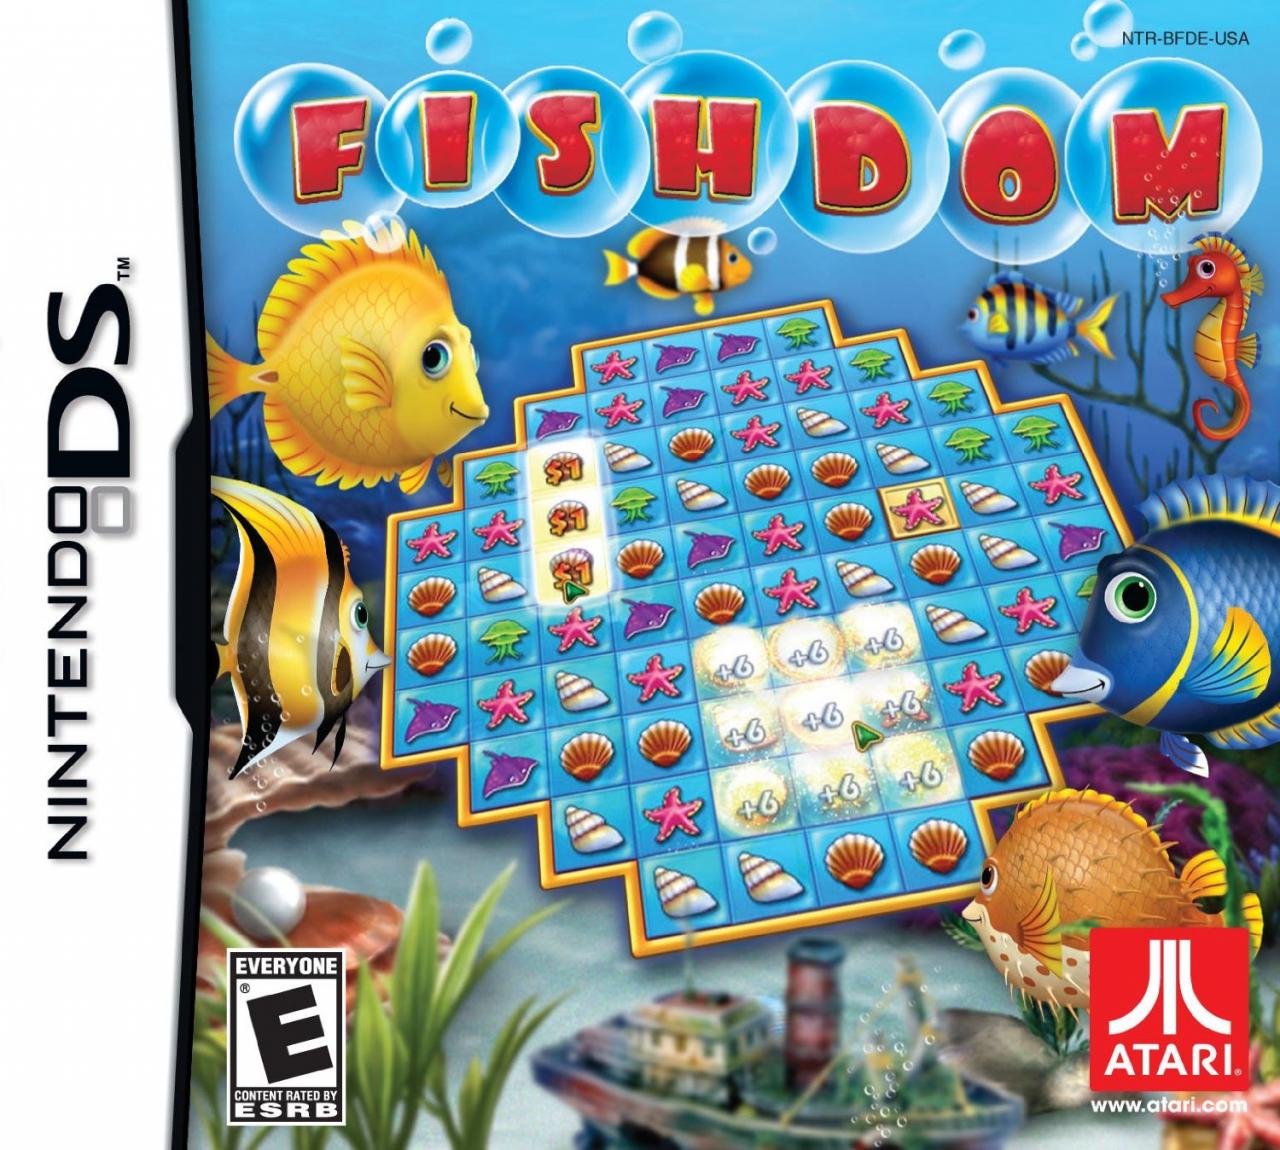 fishdom 4 free online game